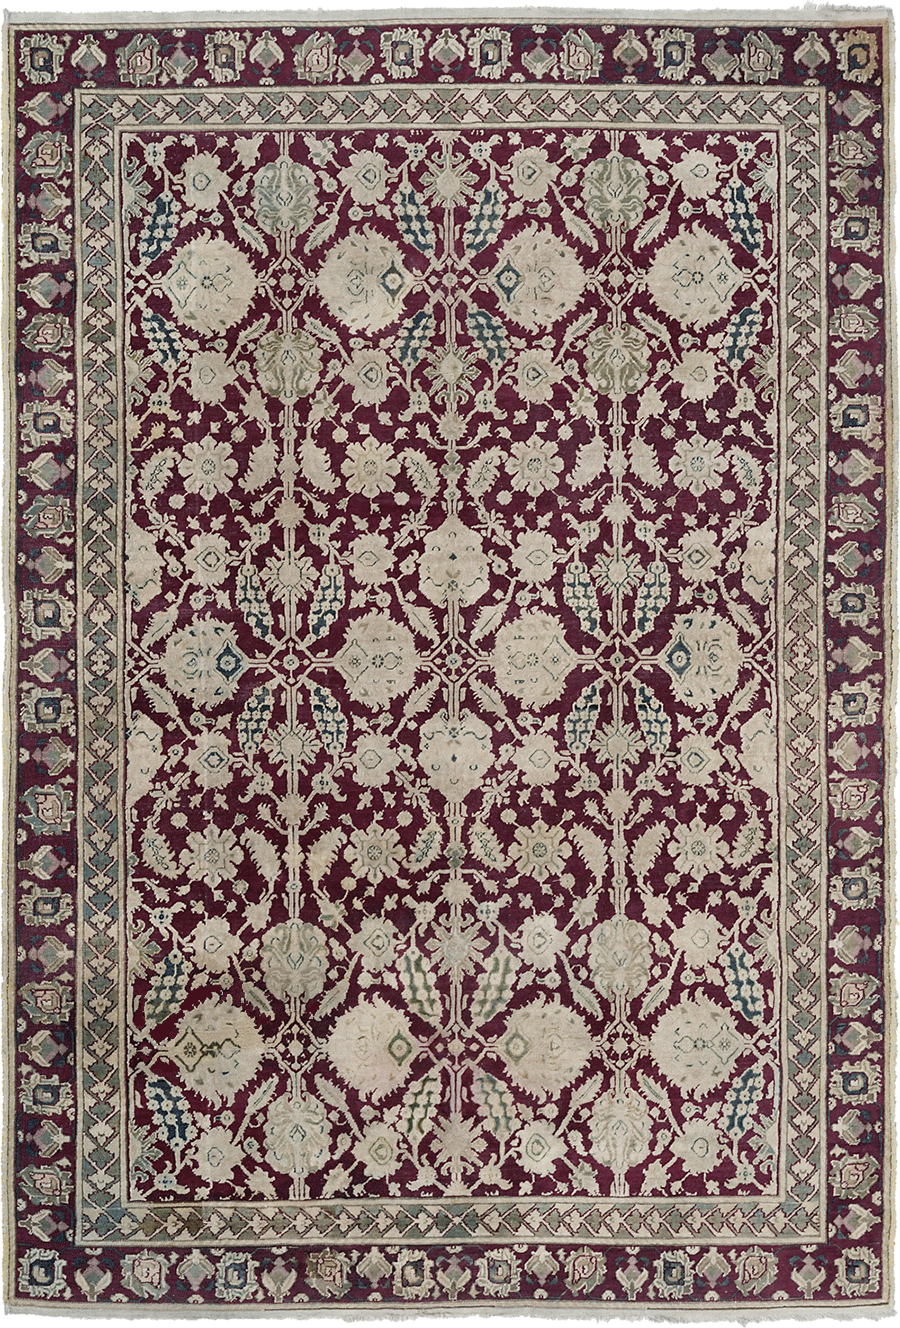 Agra small carpet